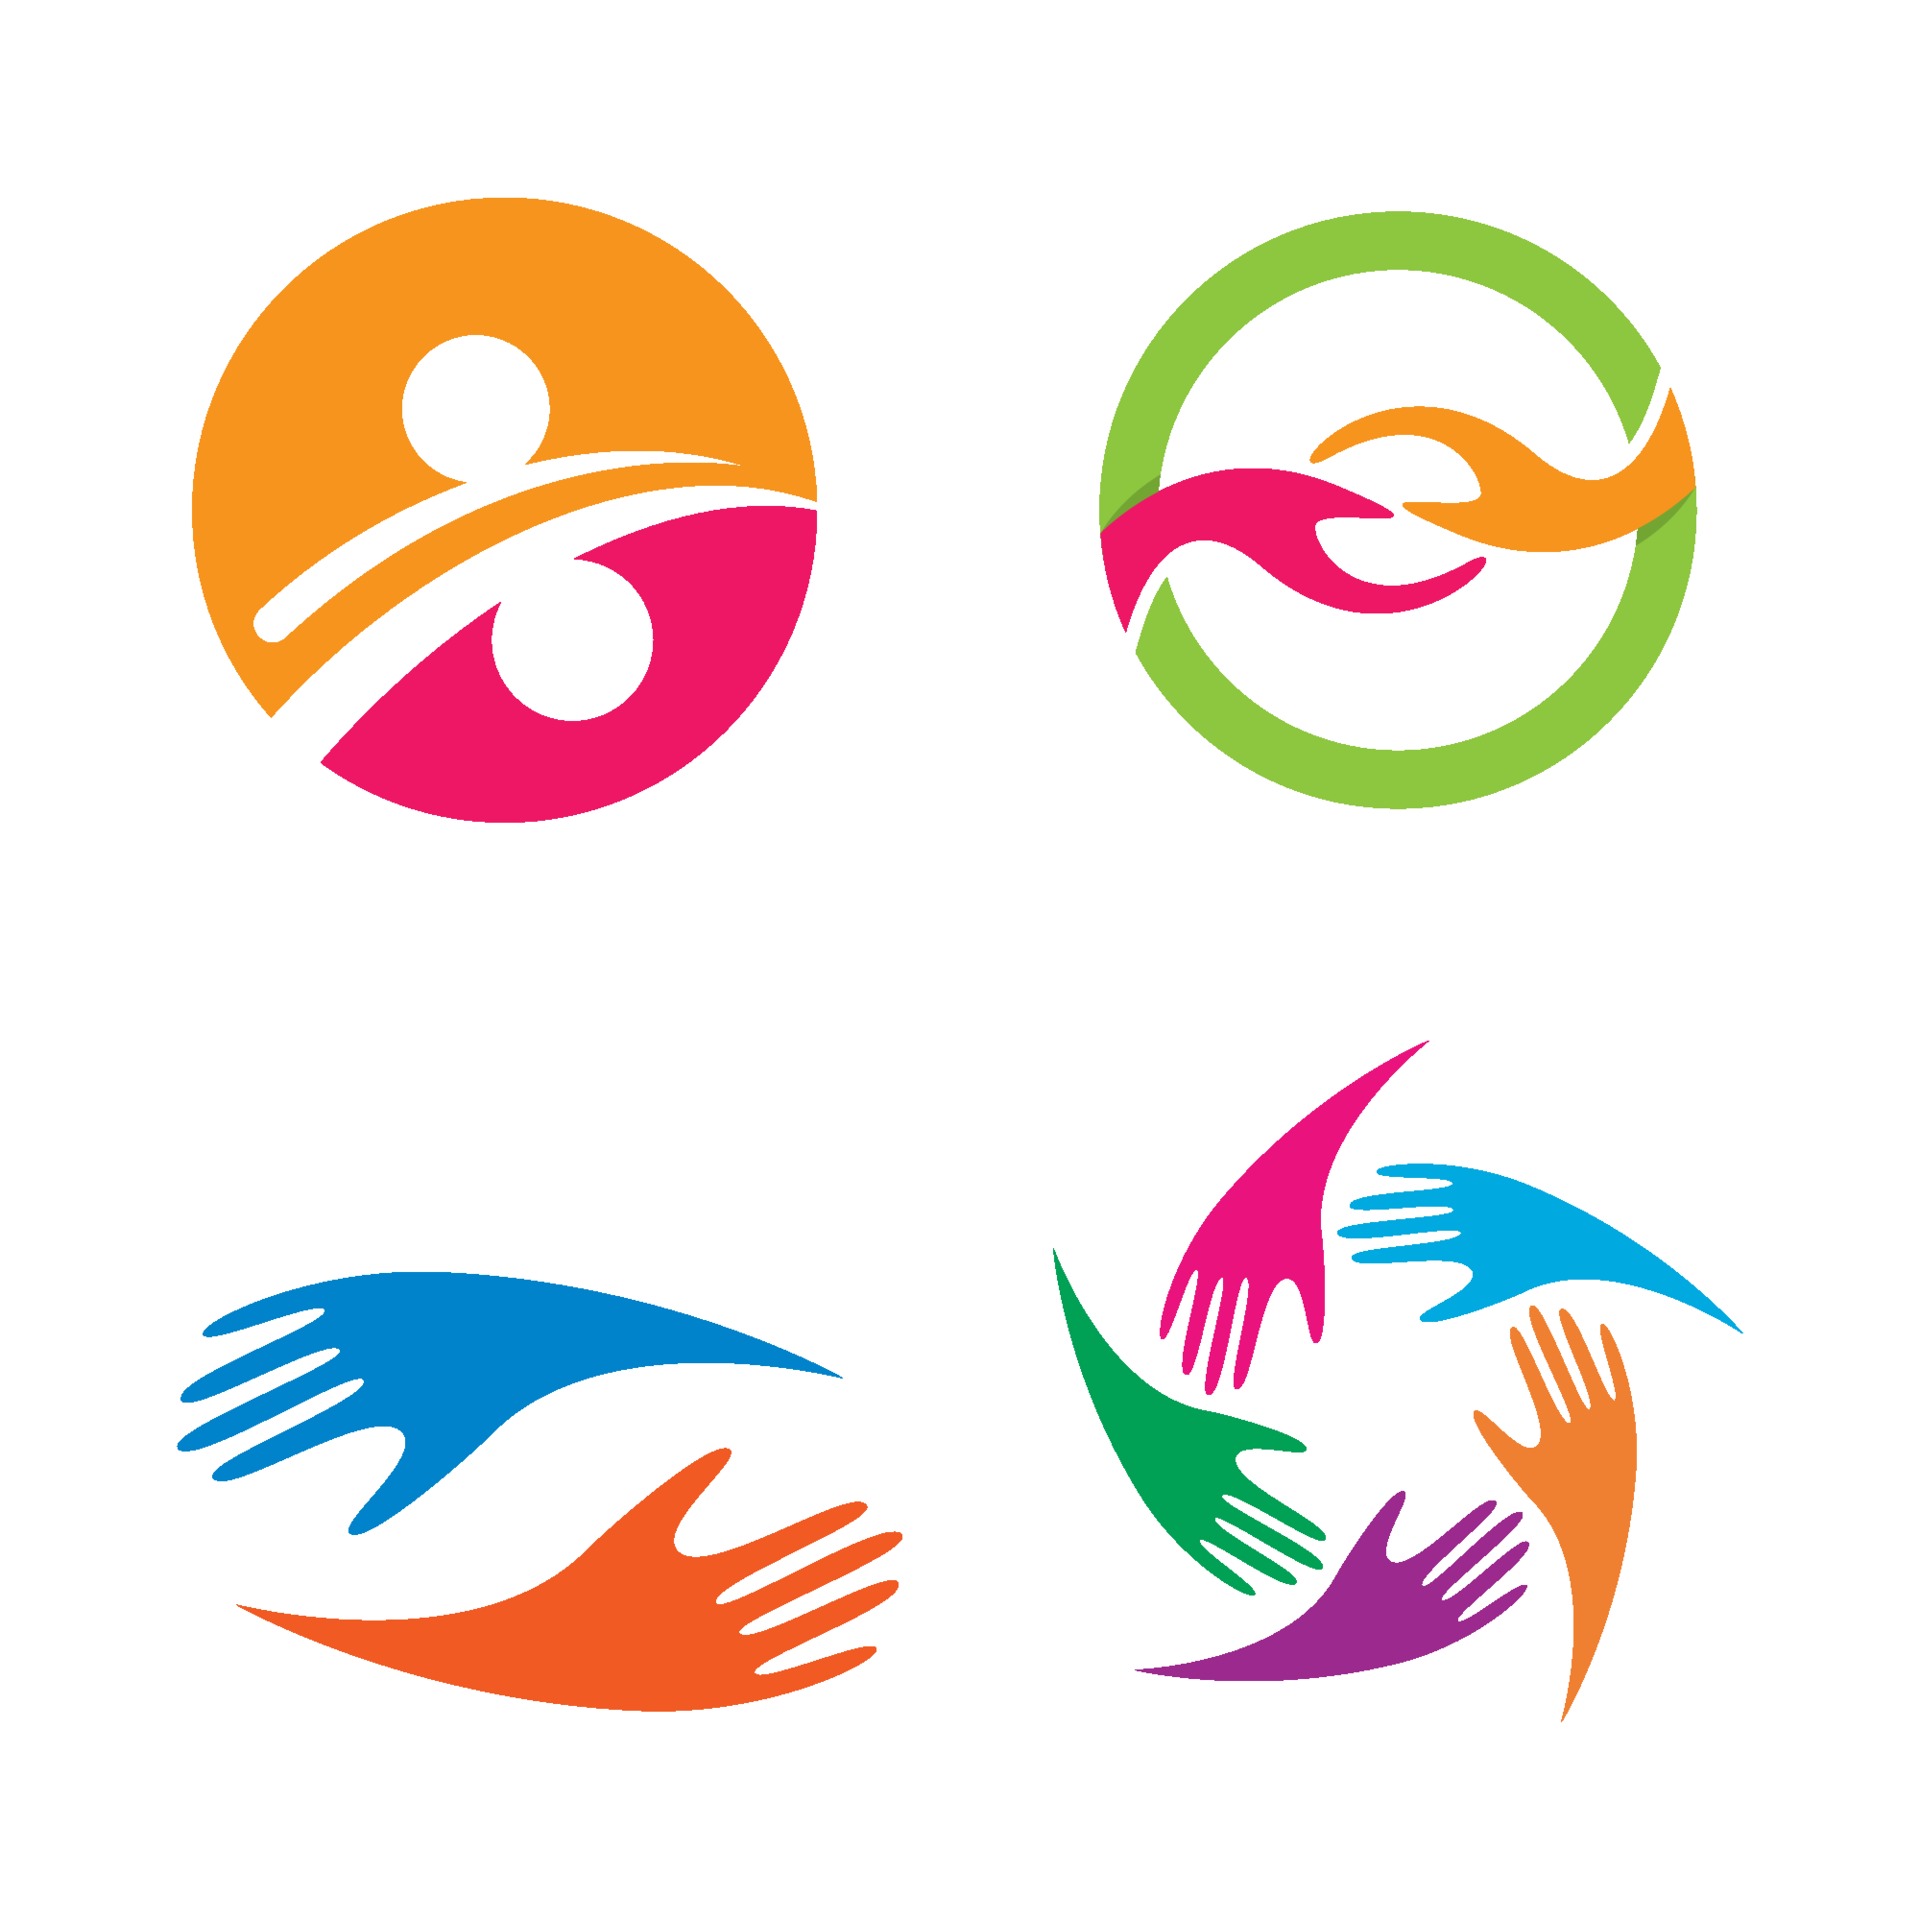 Community care logo images design set 2192335 Vector Art at Vecteezy